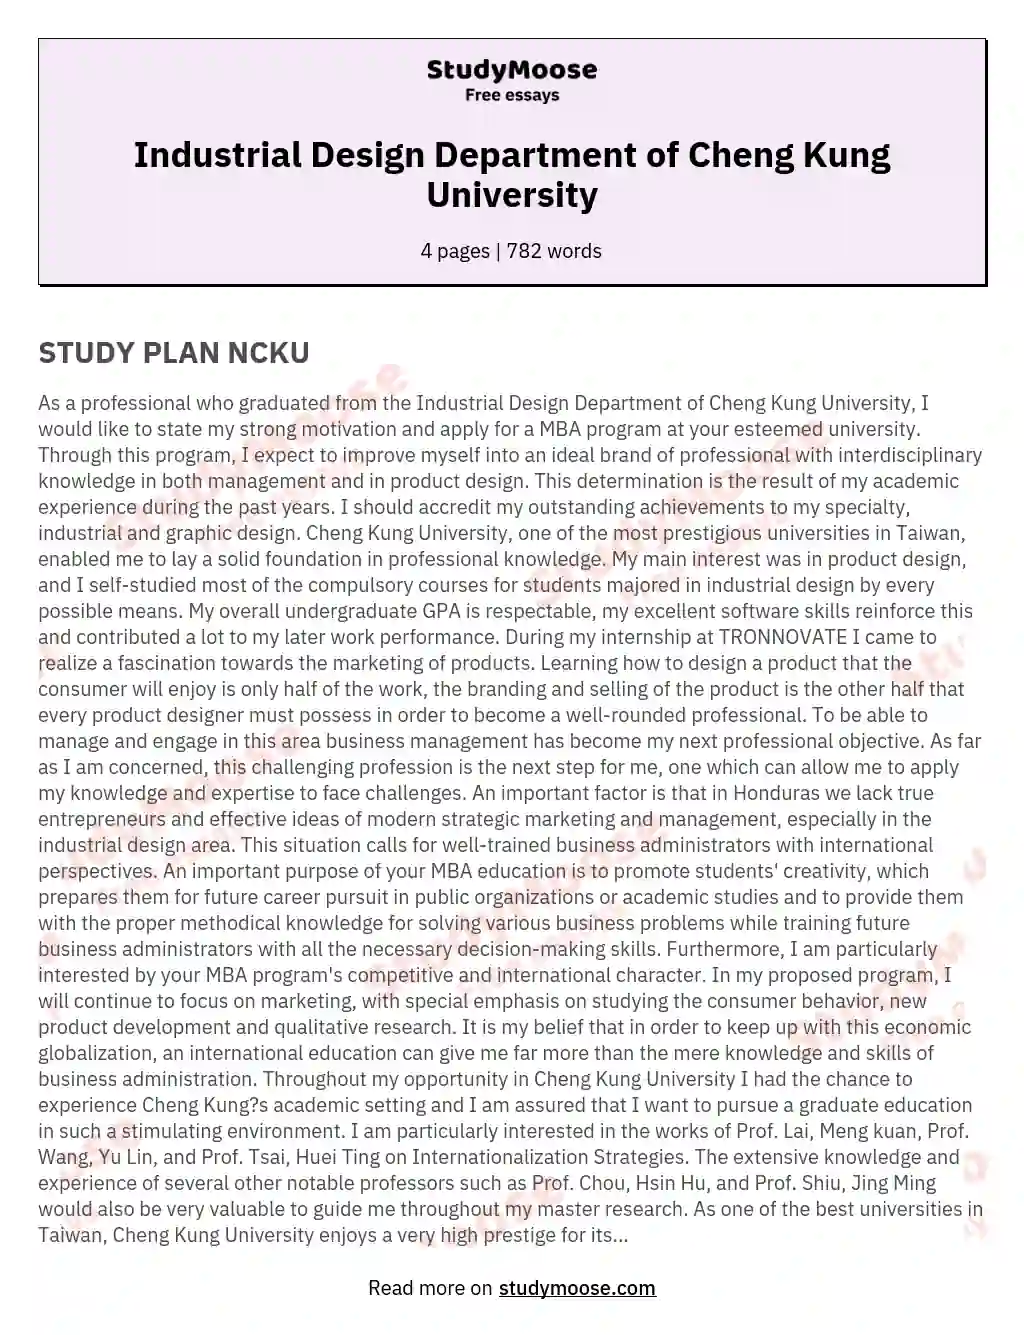 Industrial Design Department of Cheng Kung University essay